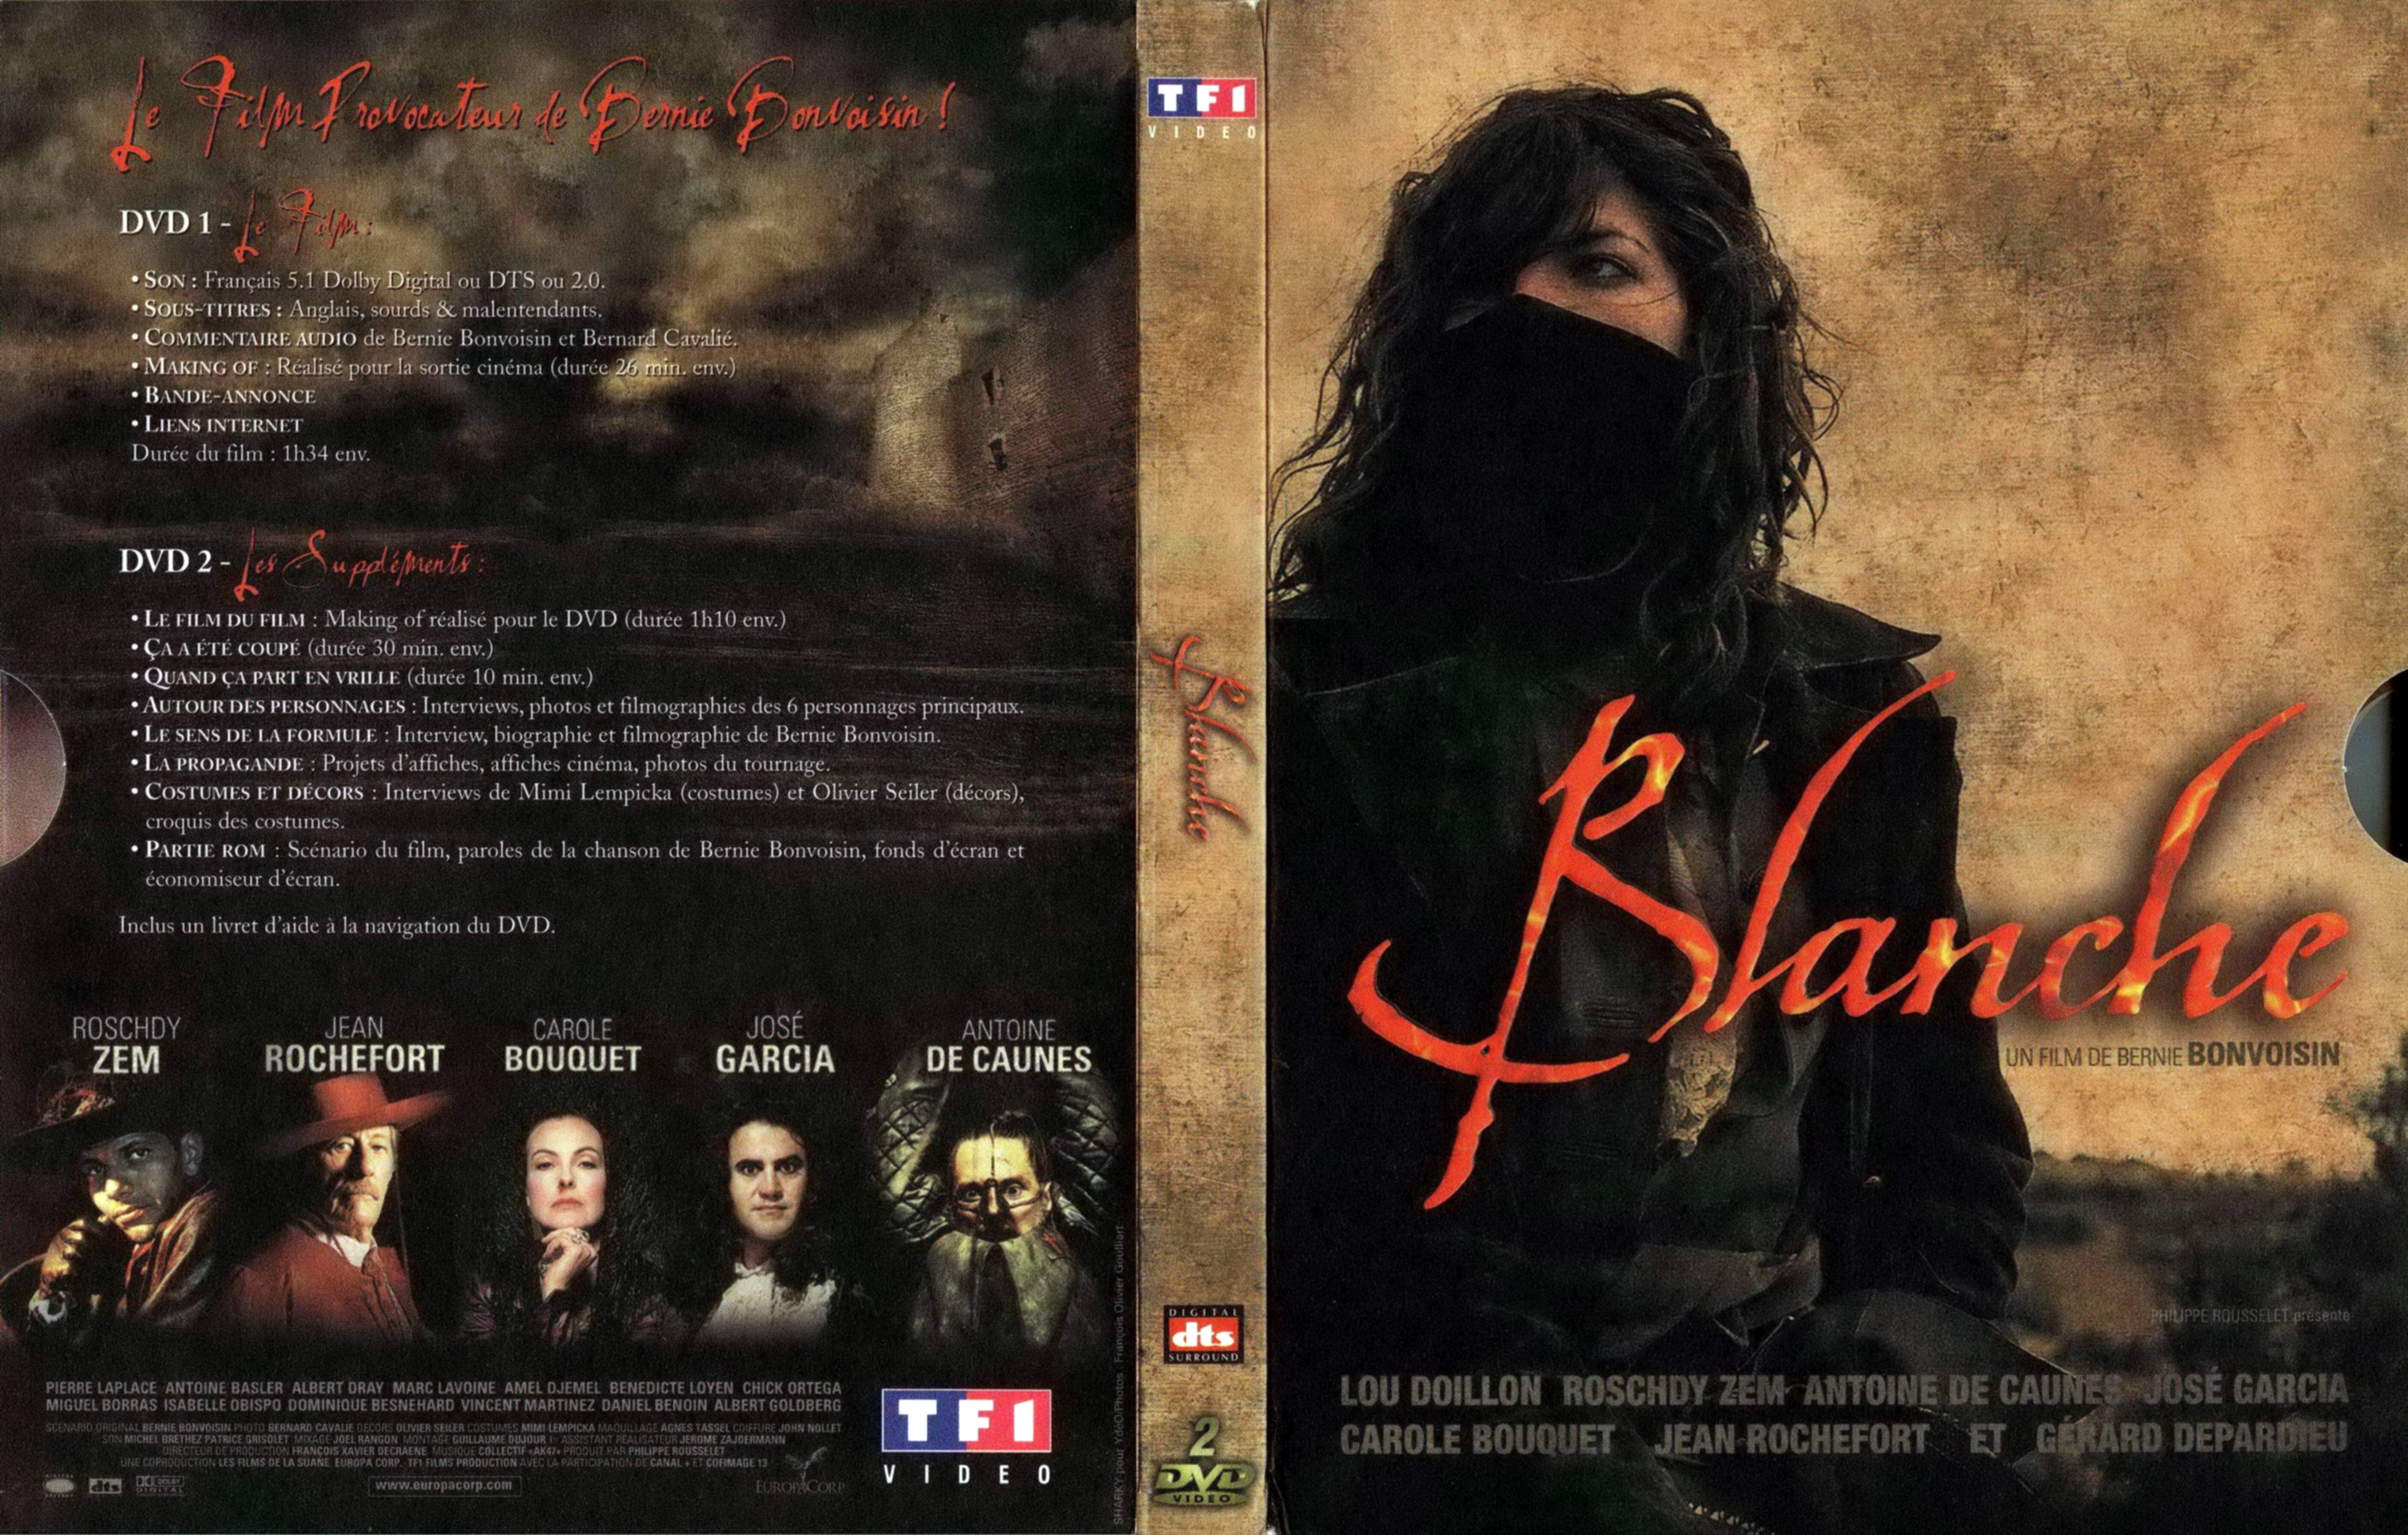 Jaquette DVD Blanche v2